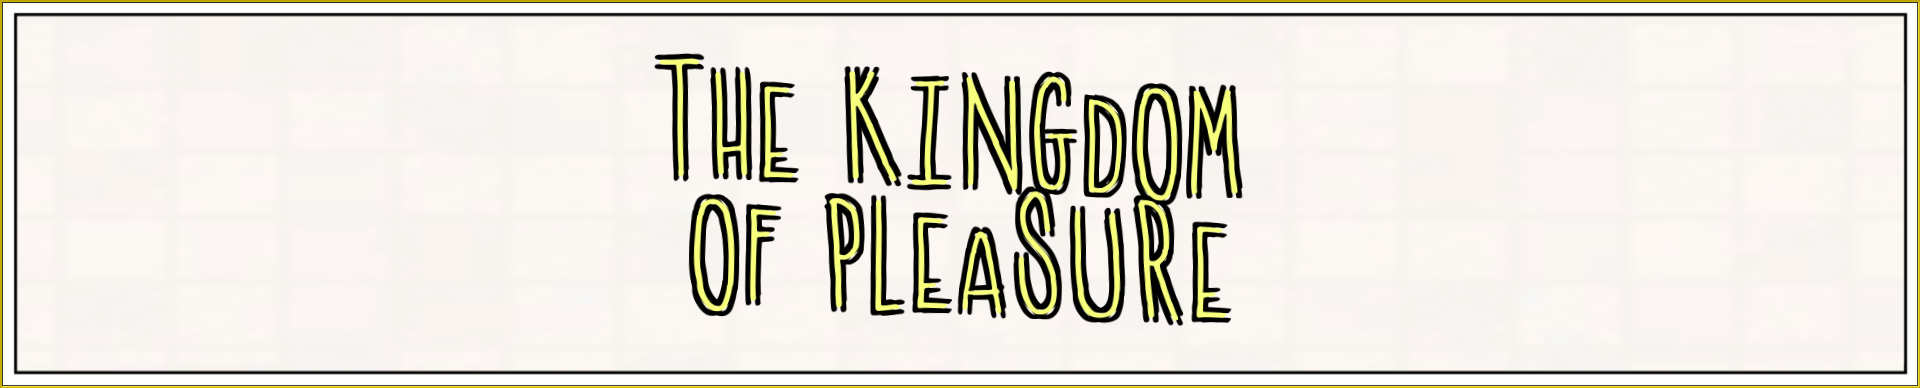 The kingdom of pleasure